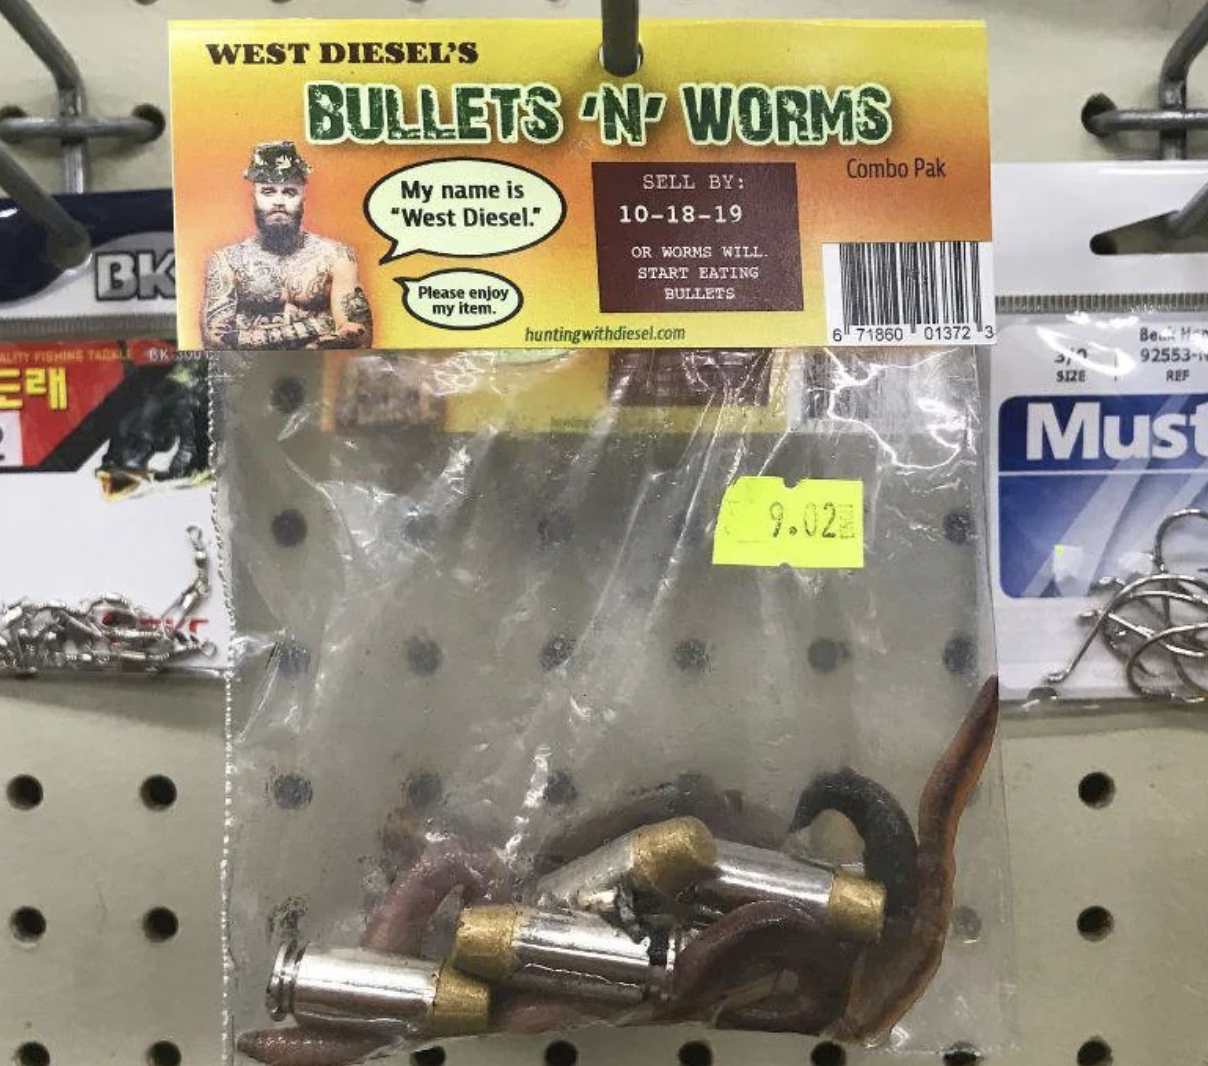 01 Bk West Diesel'S Bullets 'N Worms My name is "West Diesel." Please enjoy my item. Sell By 101819 Or Works Will Start Eating Bullets huntingwithdiesel.com Combo Pak 671860 01372 3 9.02 92553 Rop Must Size